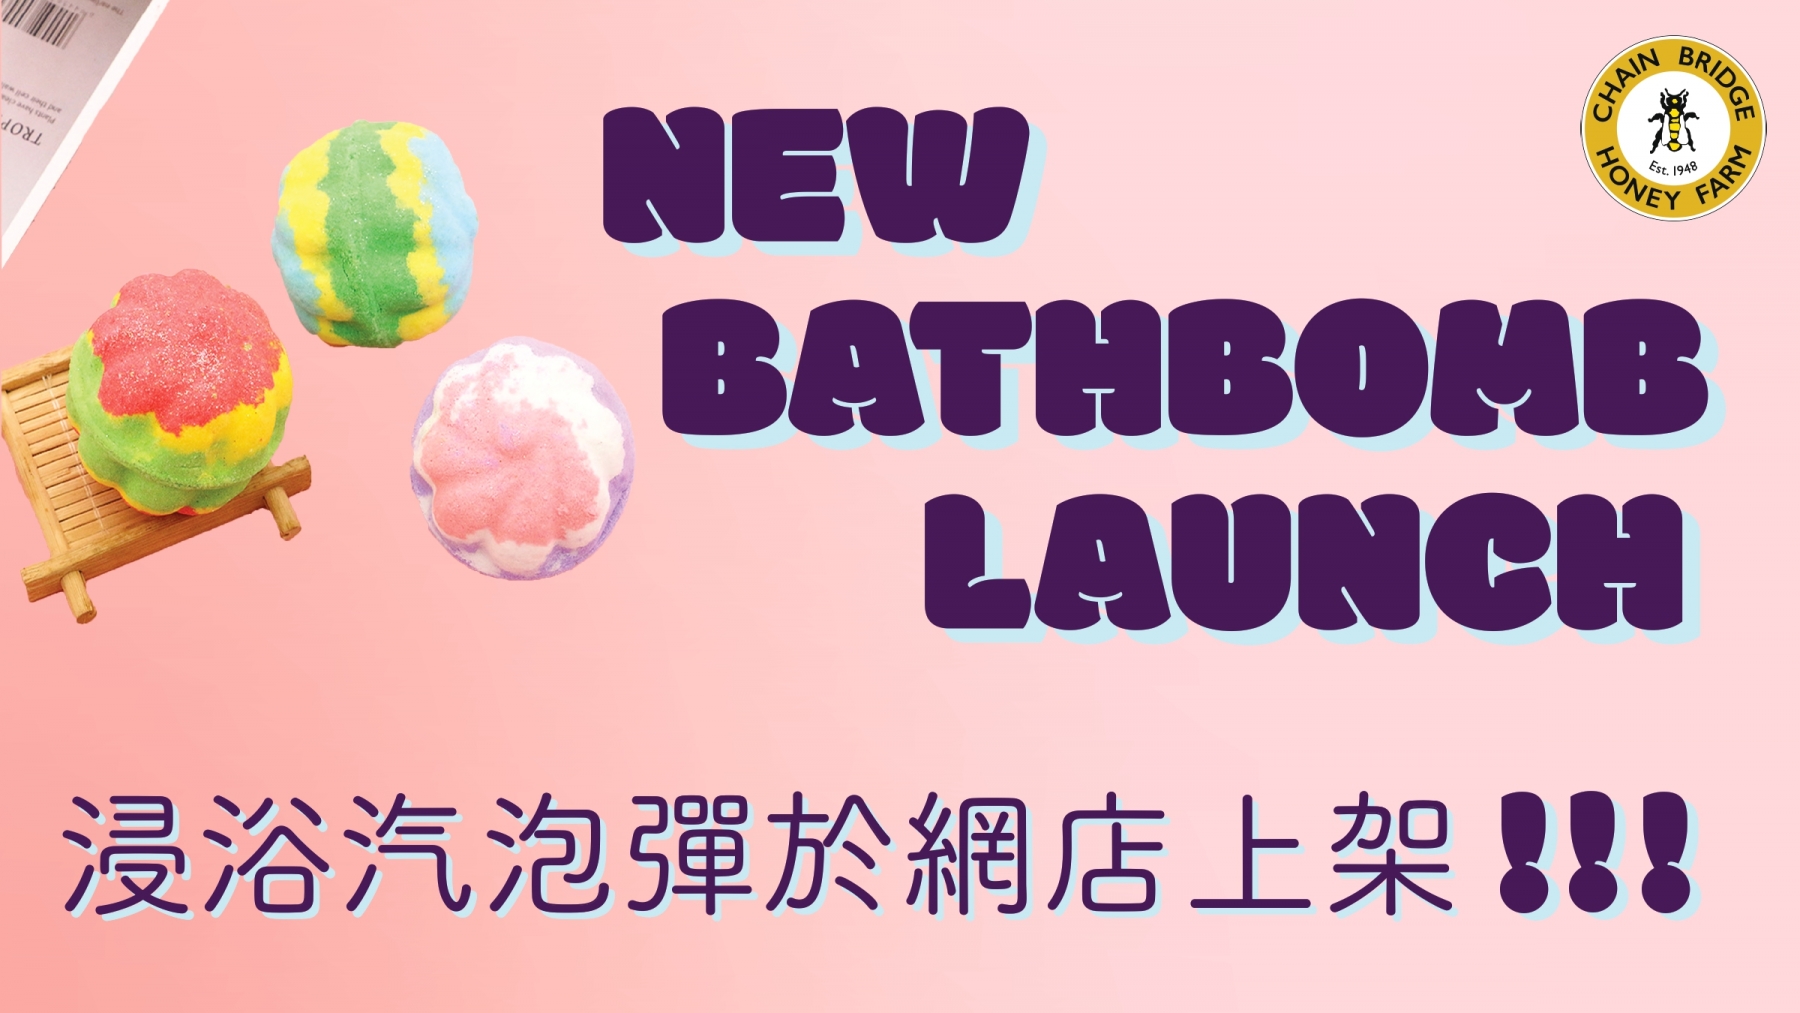 Bathbomb Launch